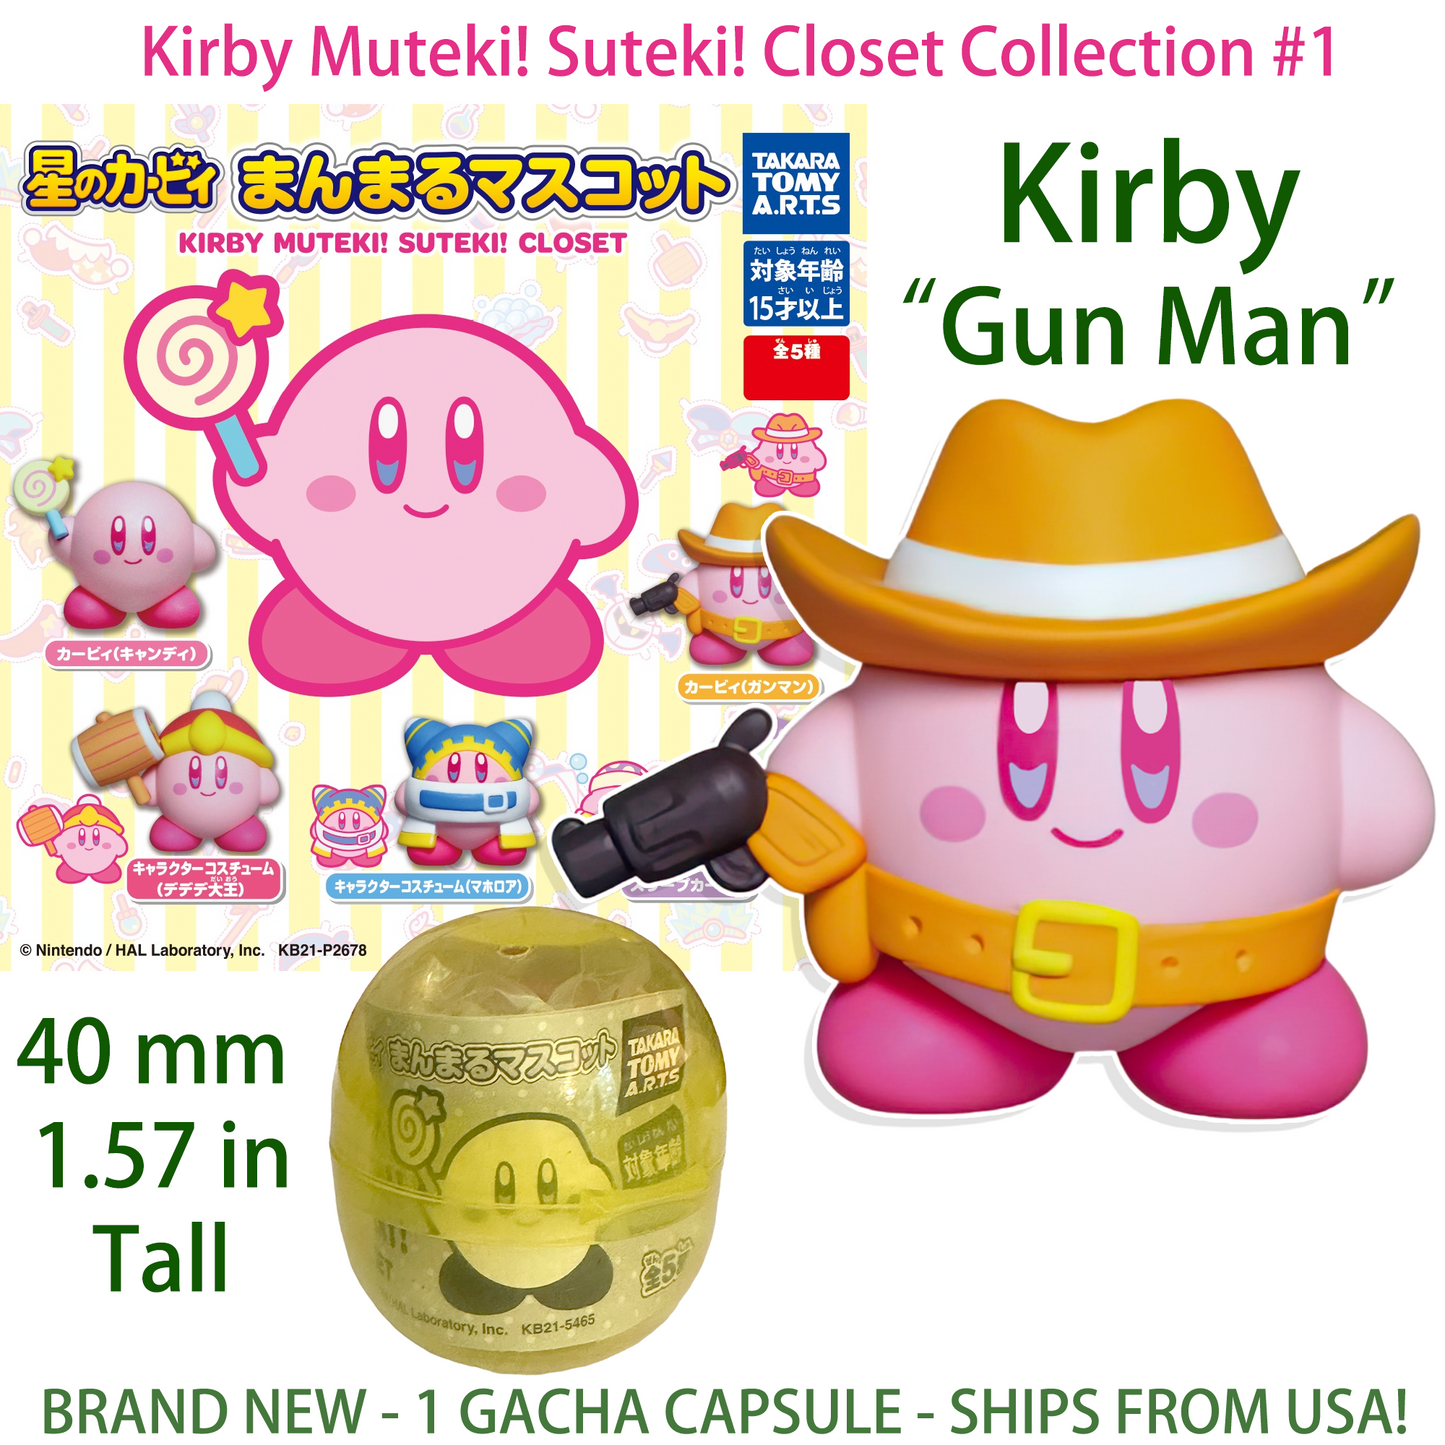 KIRBY'S SUTEKI MUTEKI! Gashapon Capsule Figure COMPLETE COLLECTION (5 Toys, NEW)